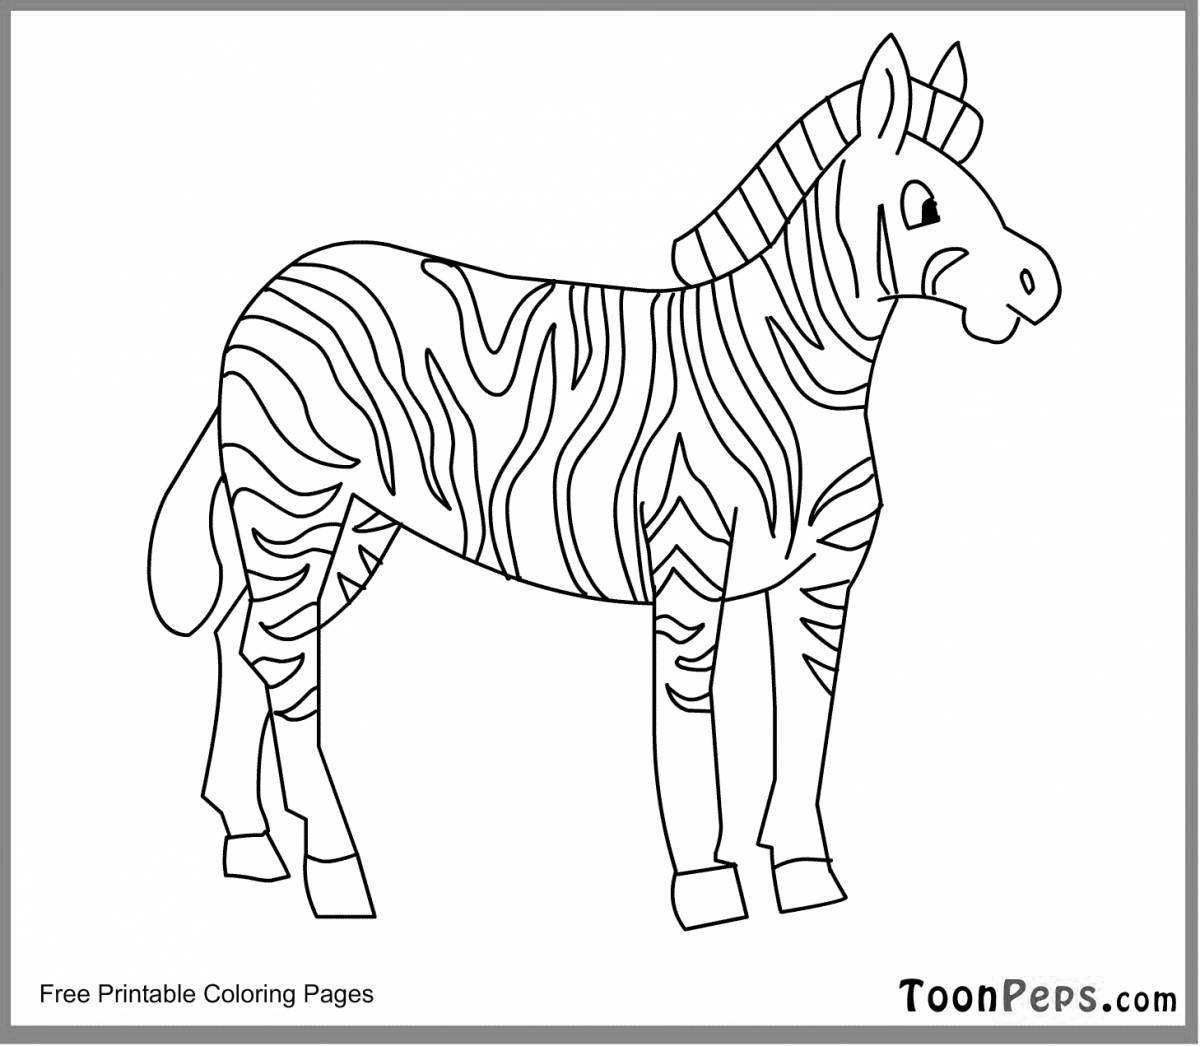 Charming zebra without stripes